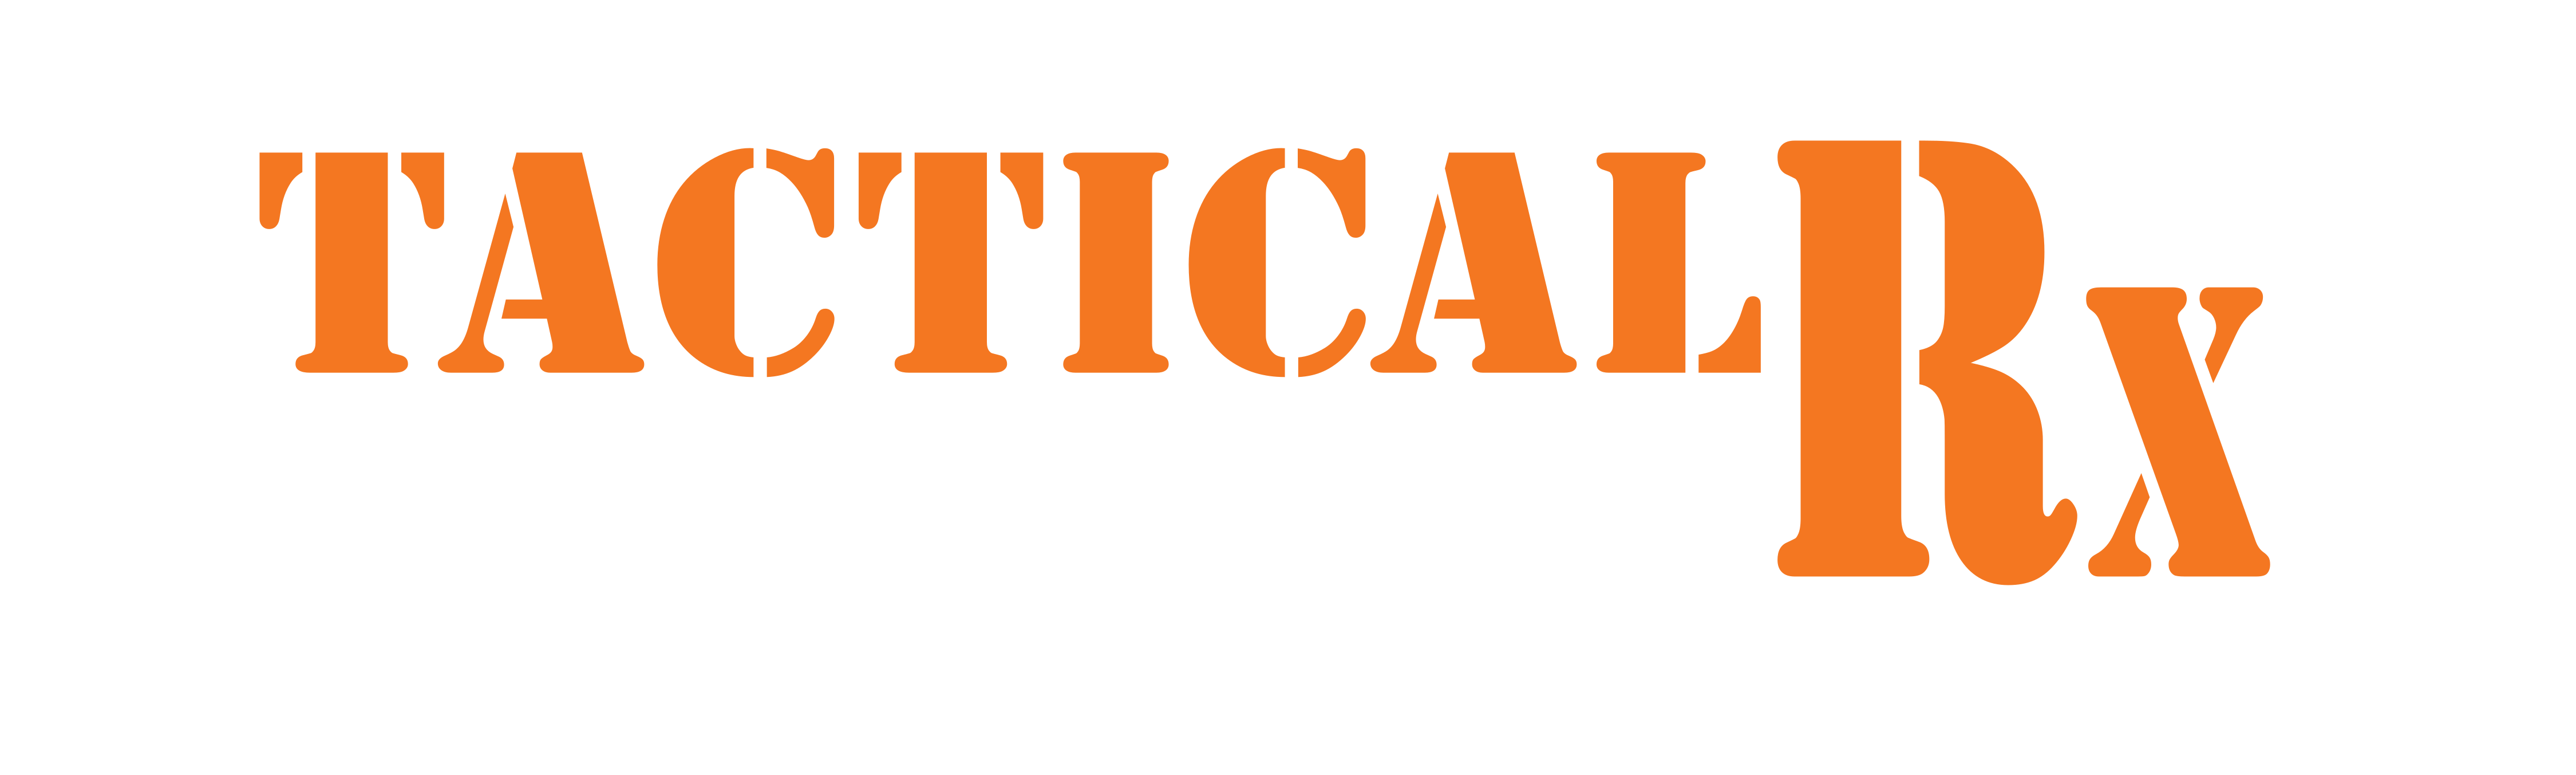 tactical rx logo orange